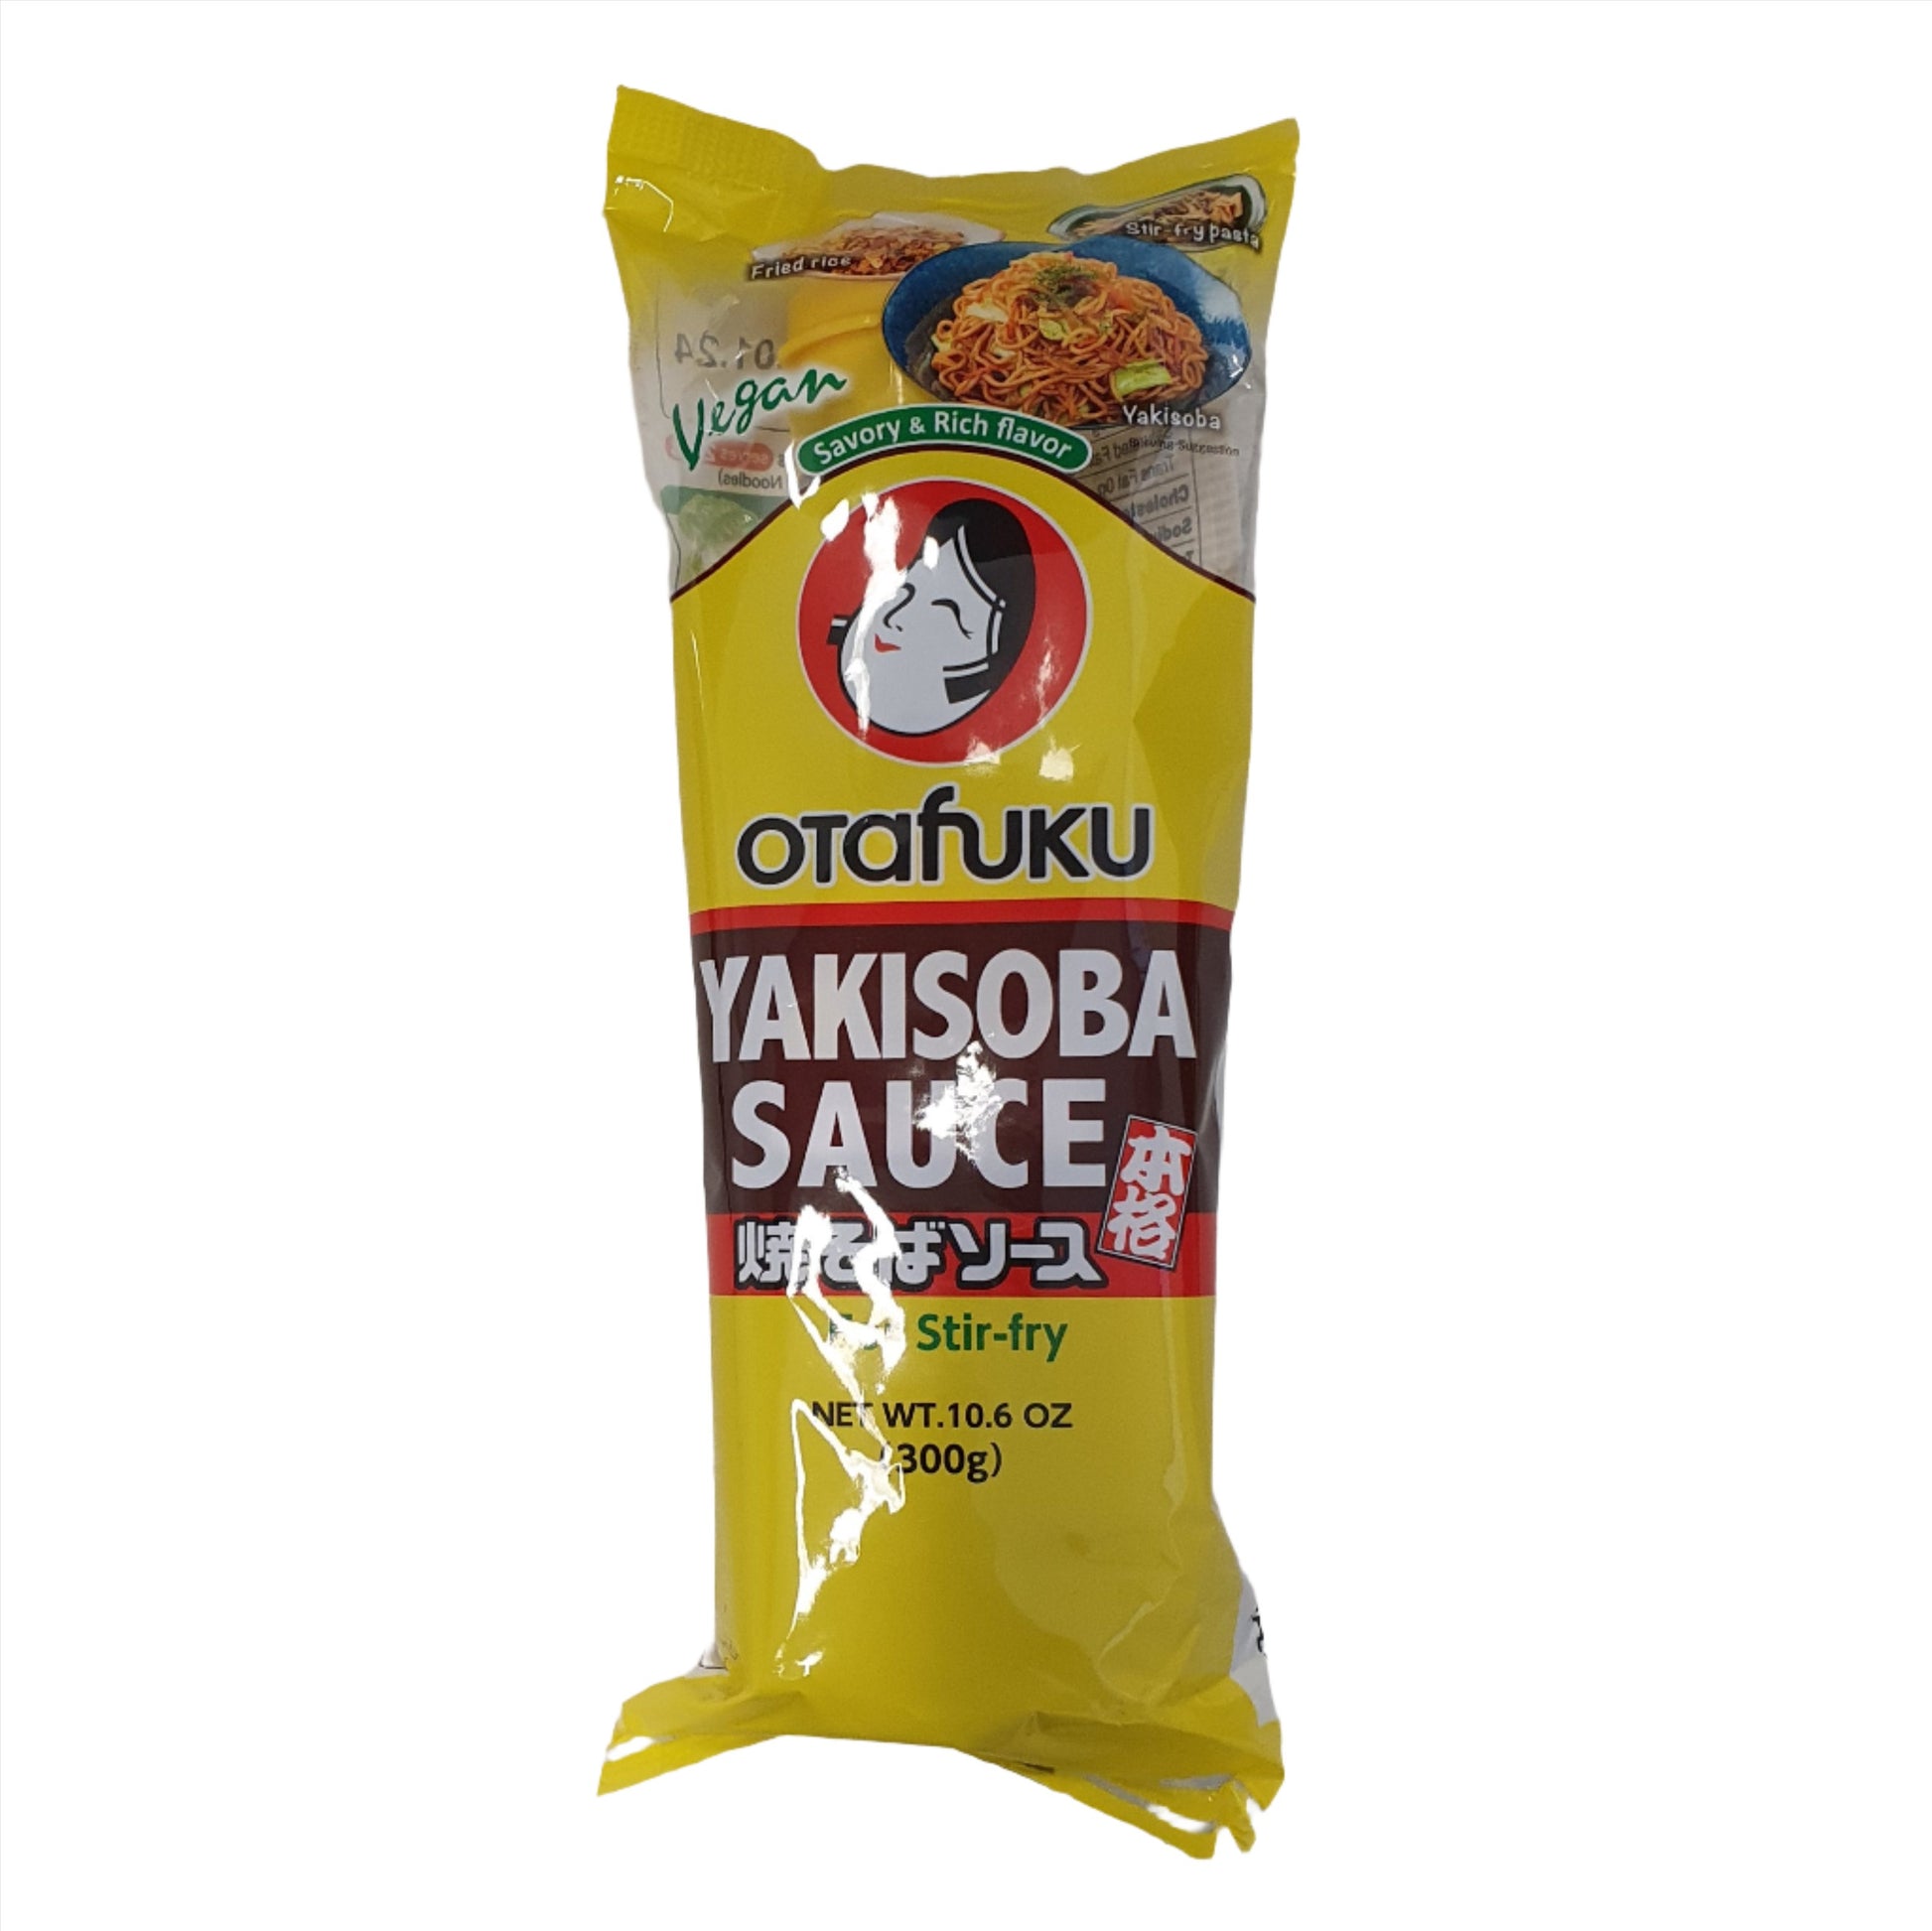 Otafuku Yakisoba Sauce 300g - Worldster Markt e.K.